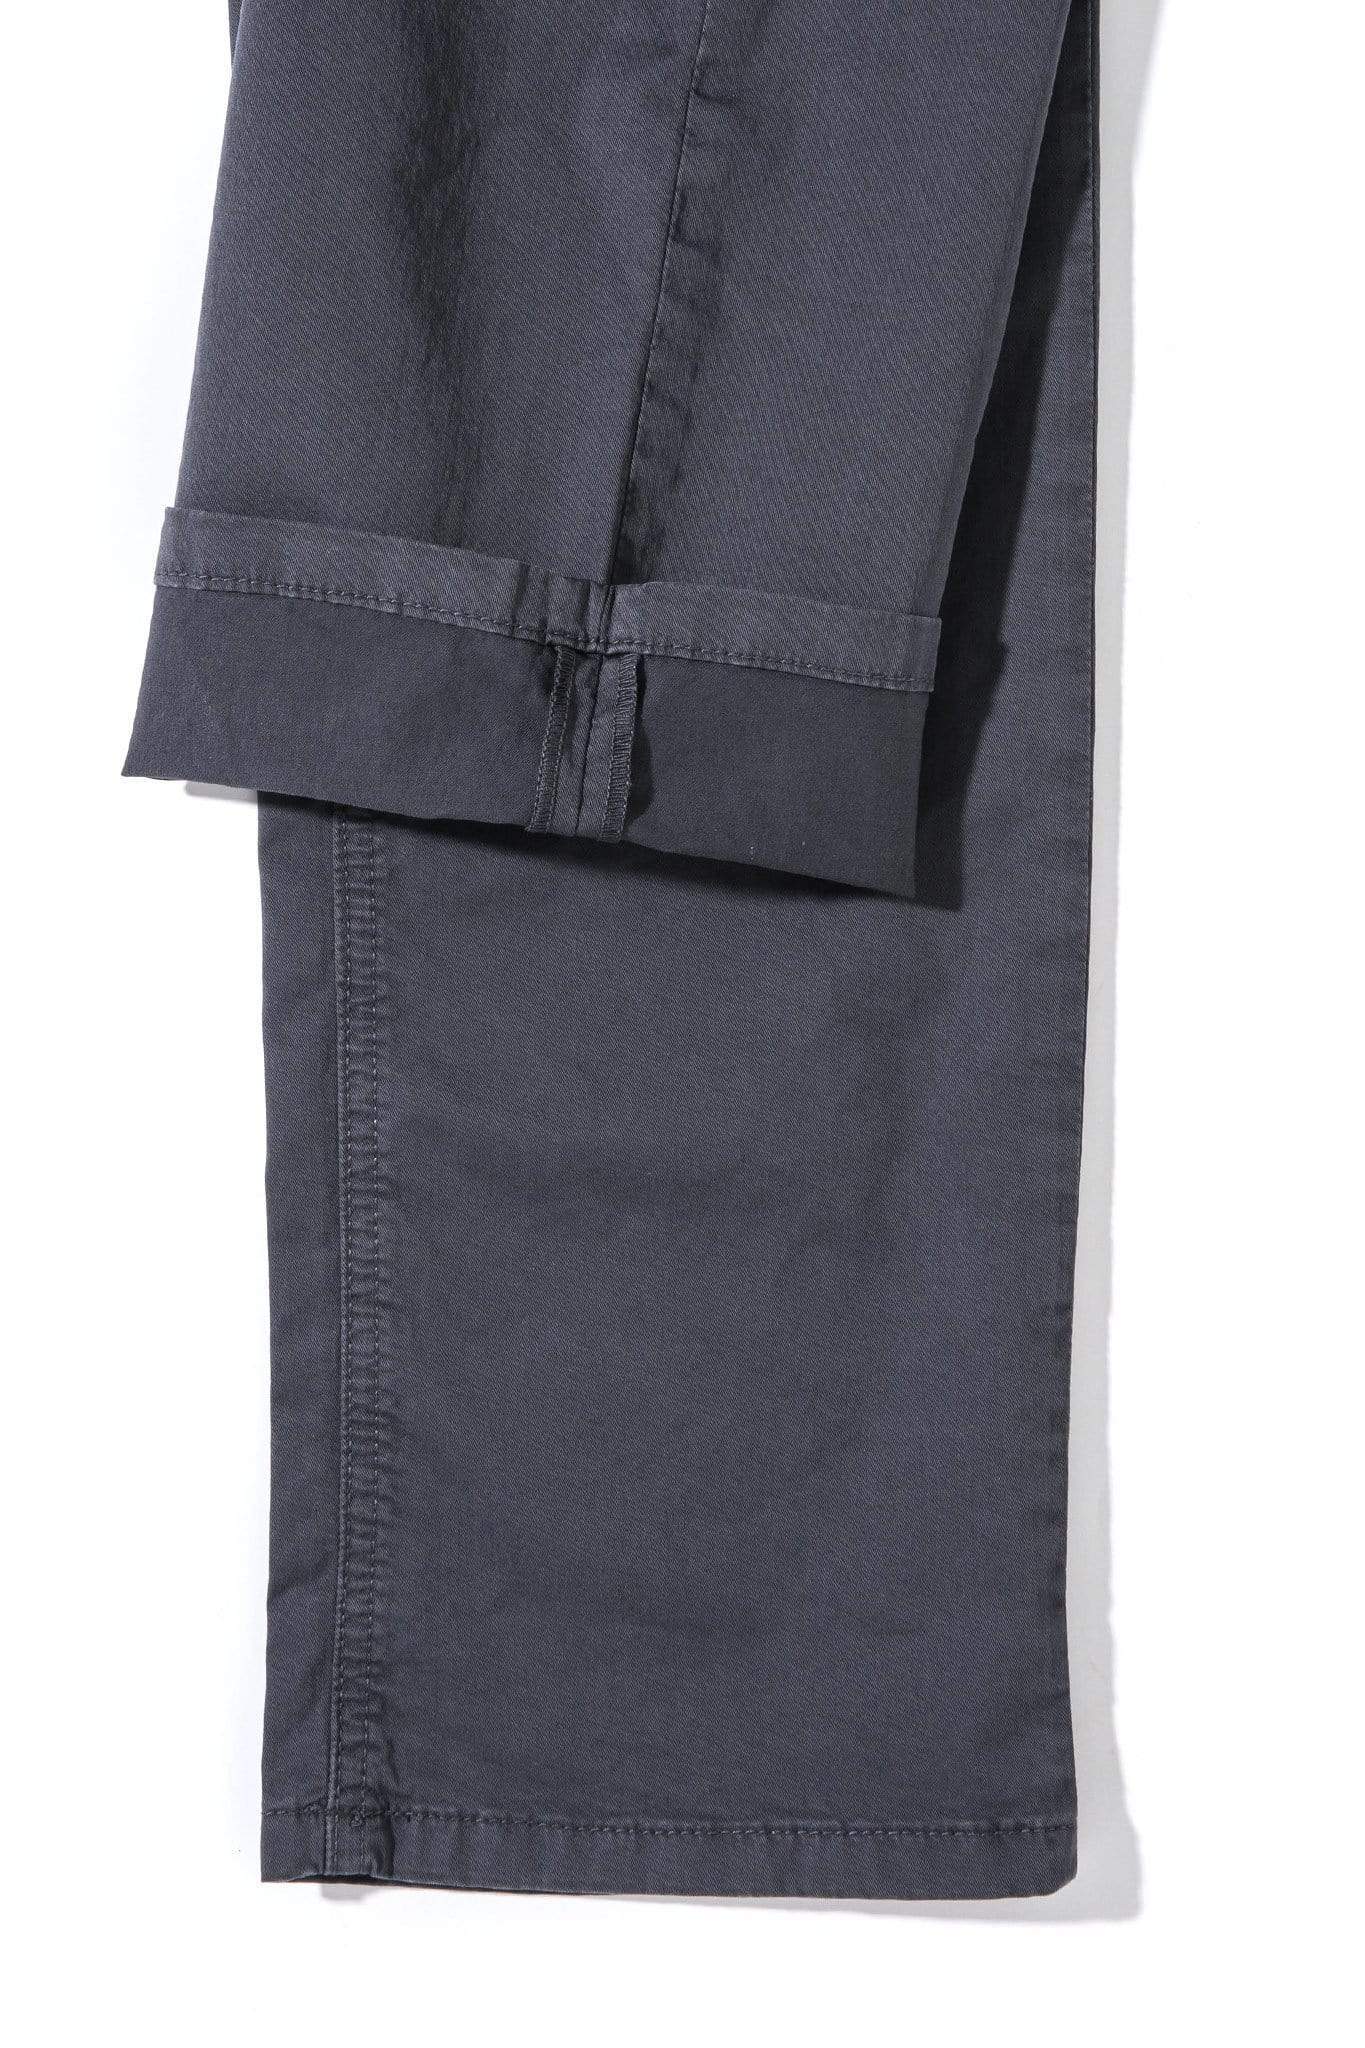 Fowler Ultralight Performance Pant In Slate | Mens - Pants - 5 Pocket | Teleria Zed